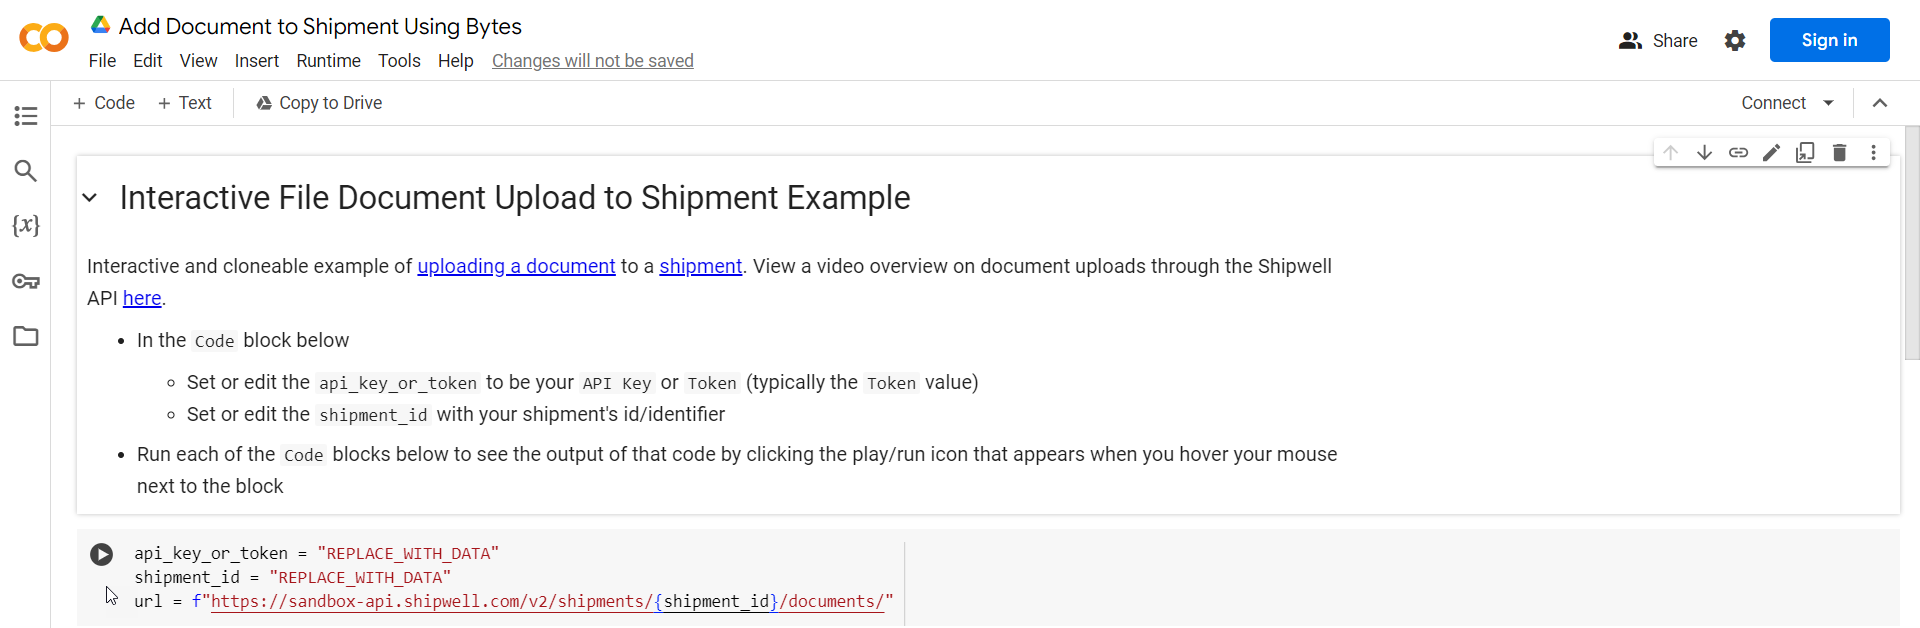 Shipment Document Upload Python Notebook